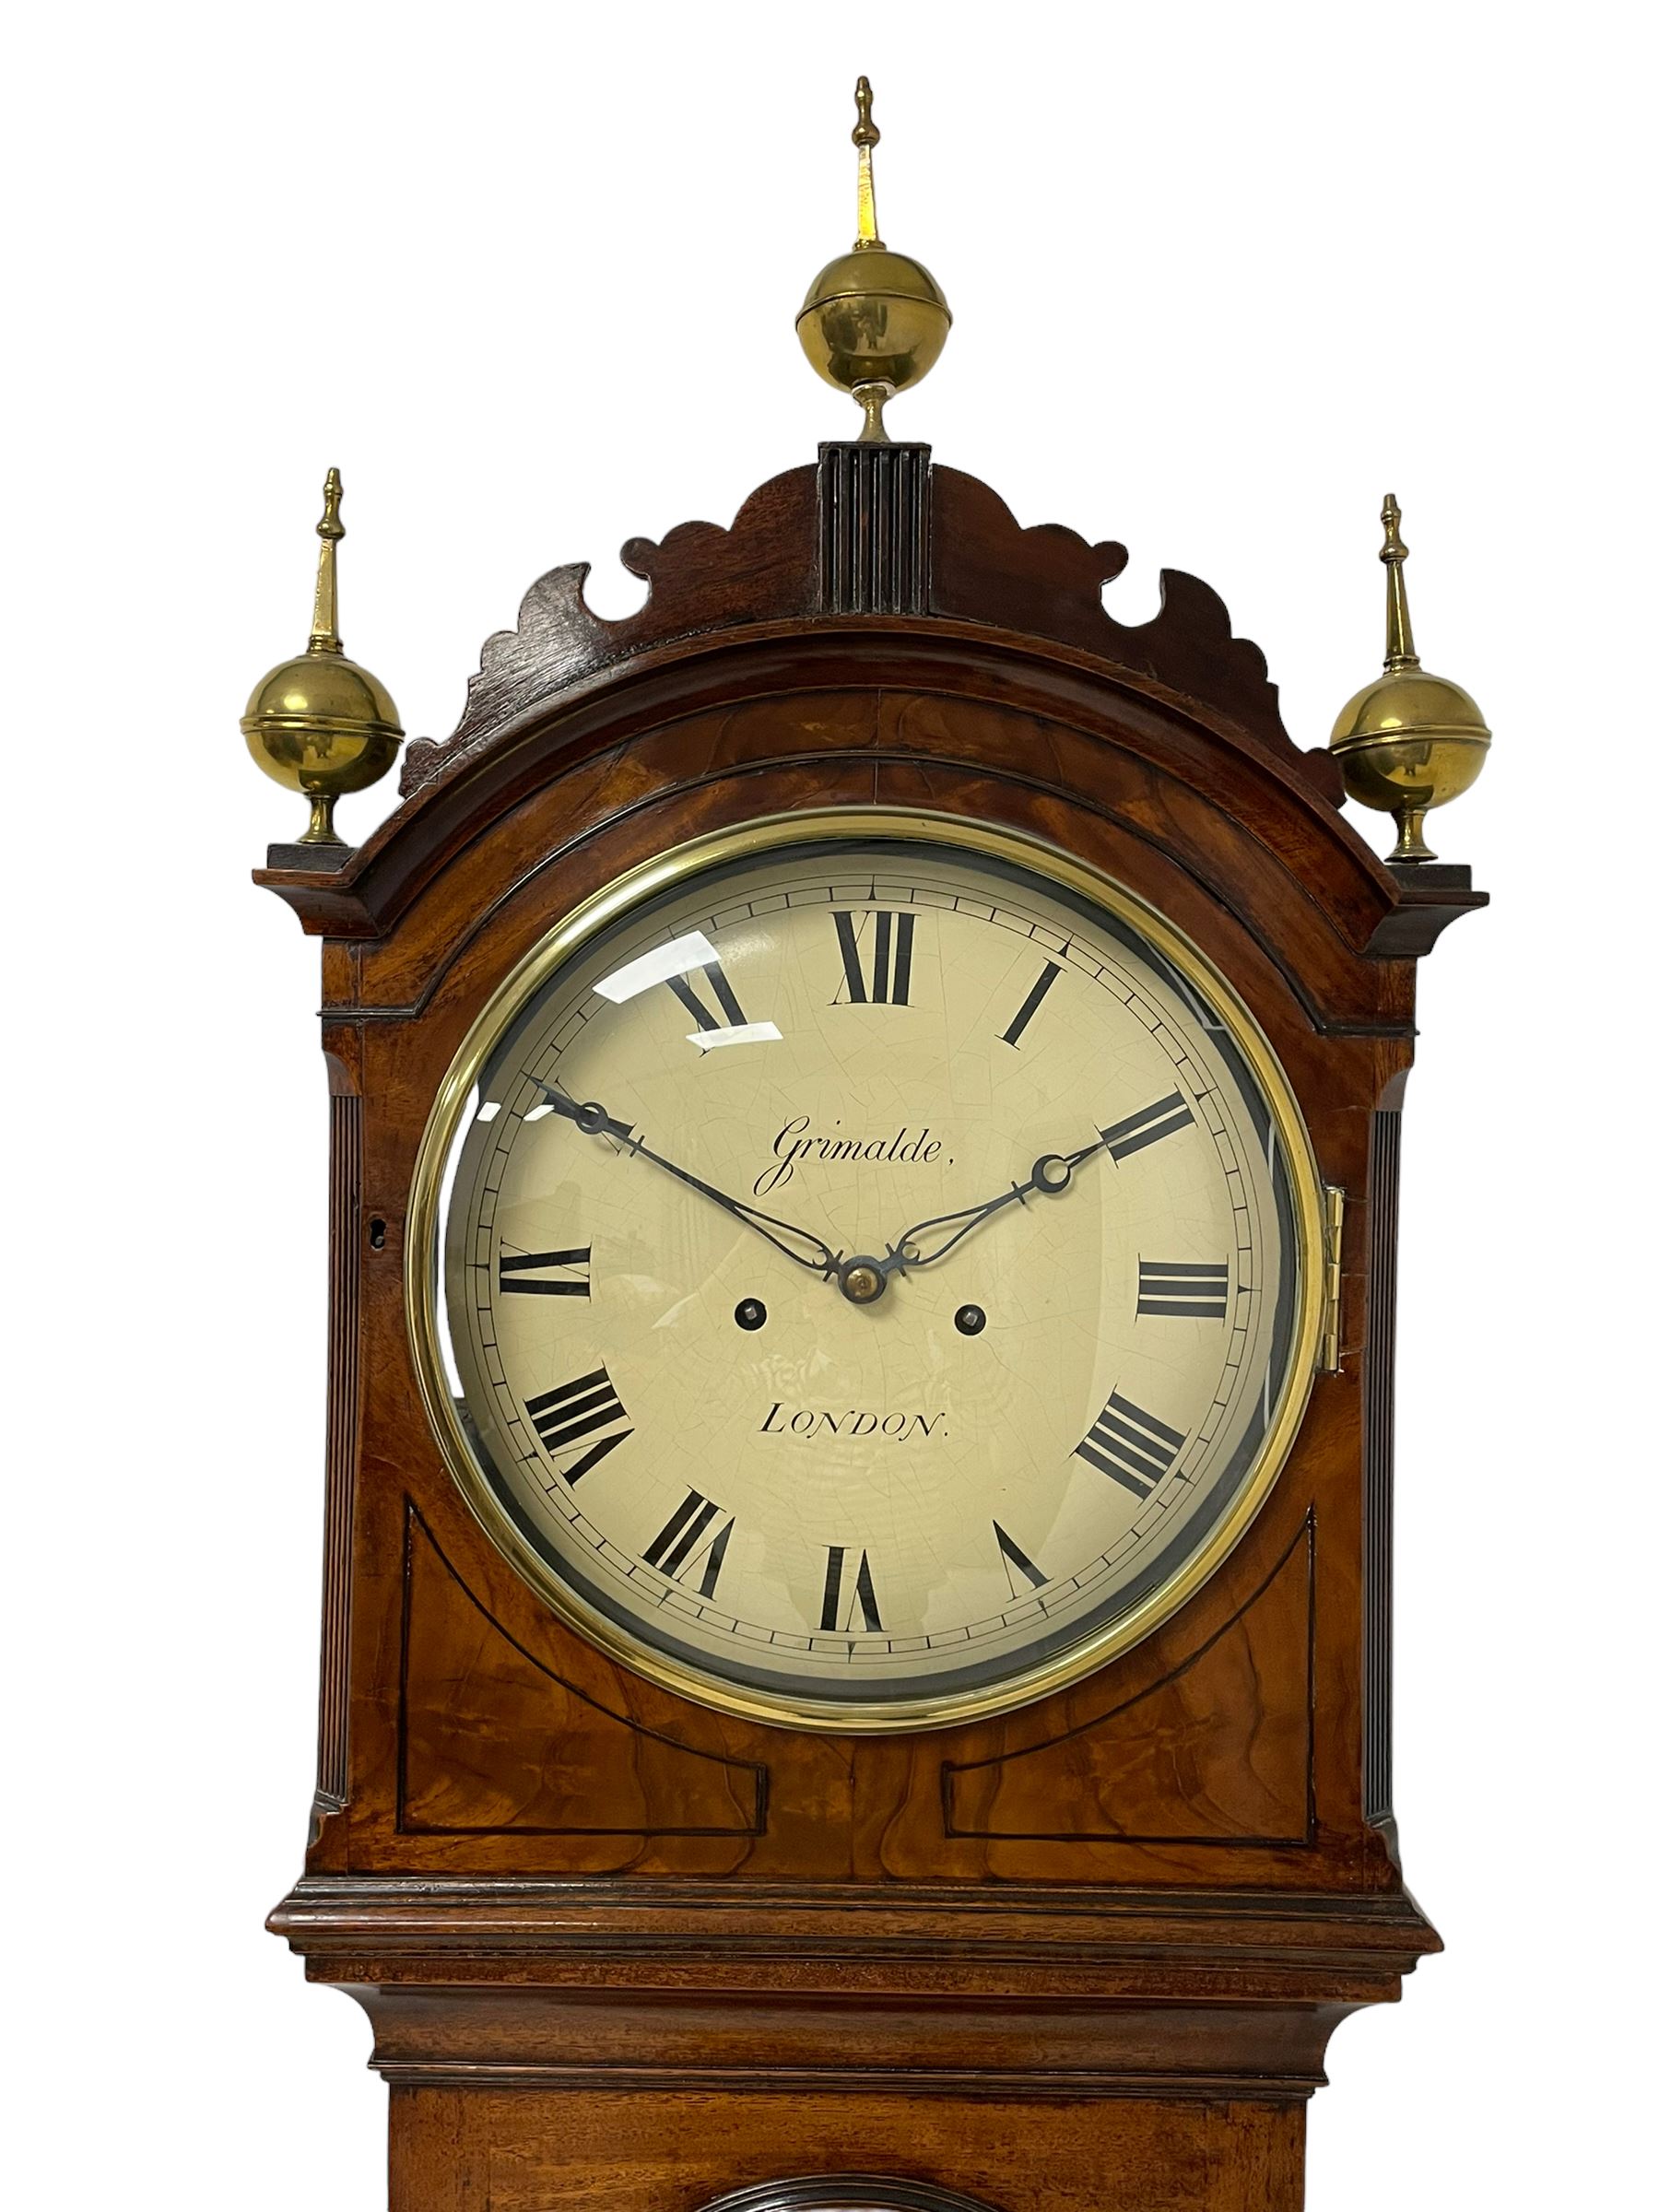 Grimalde of London - Mahogany 8-day longcase clock c1805 - Image 4 of 14